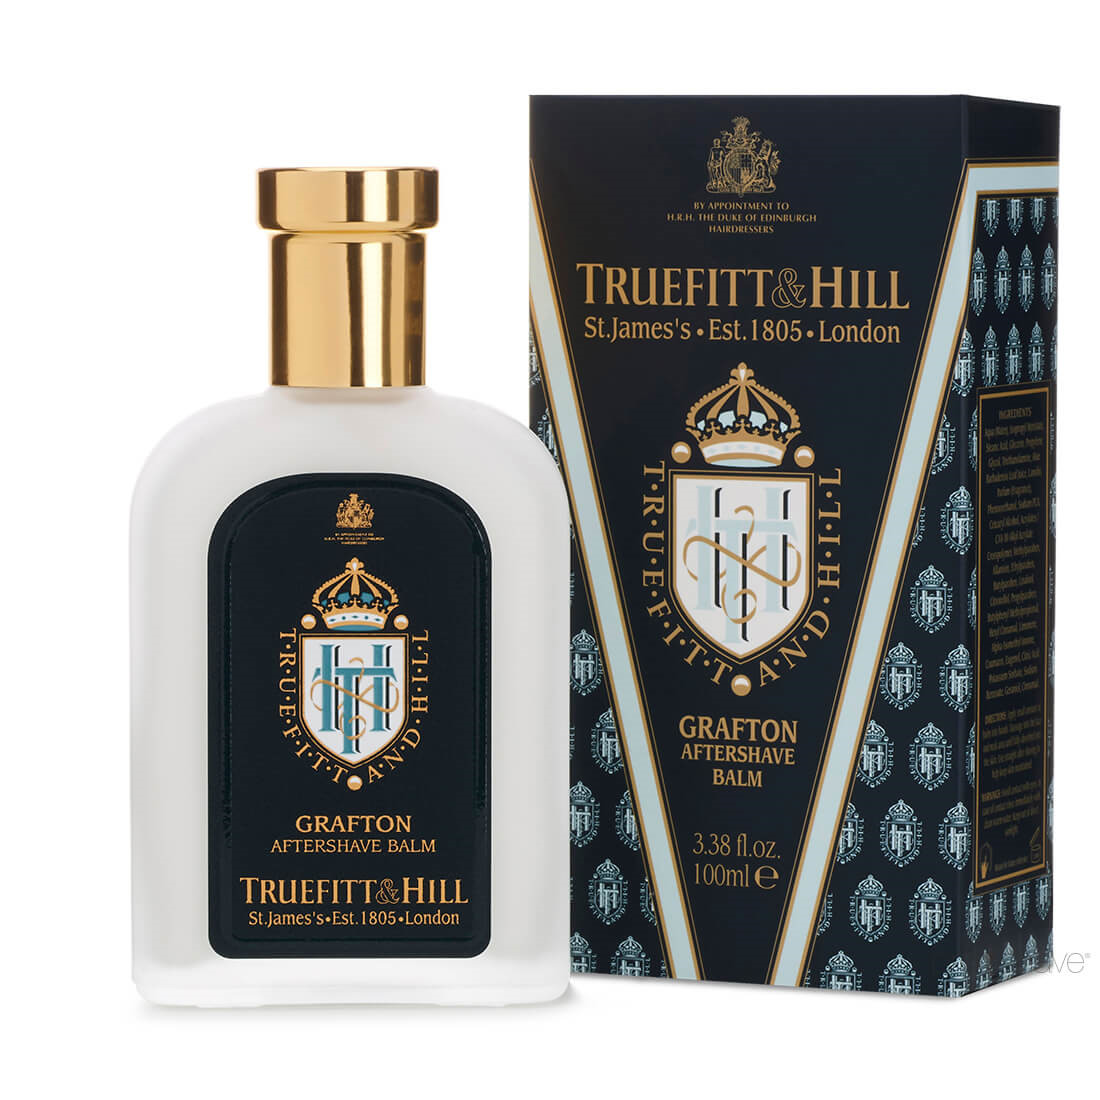 Truefitt & Hill Aftershave Balm, Grafton, 100 ml.